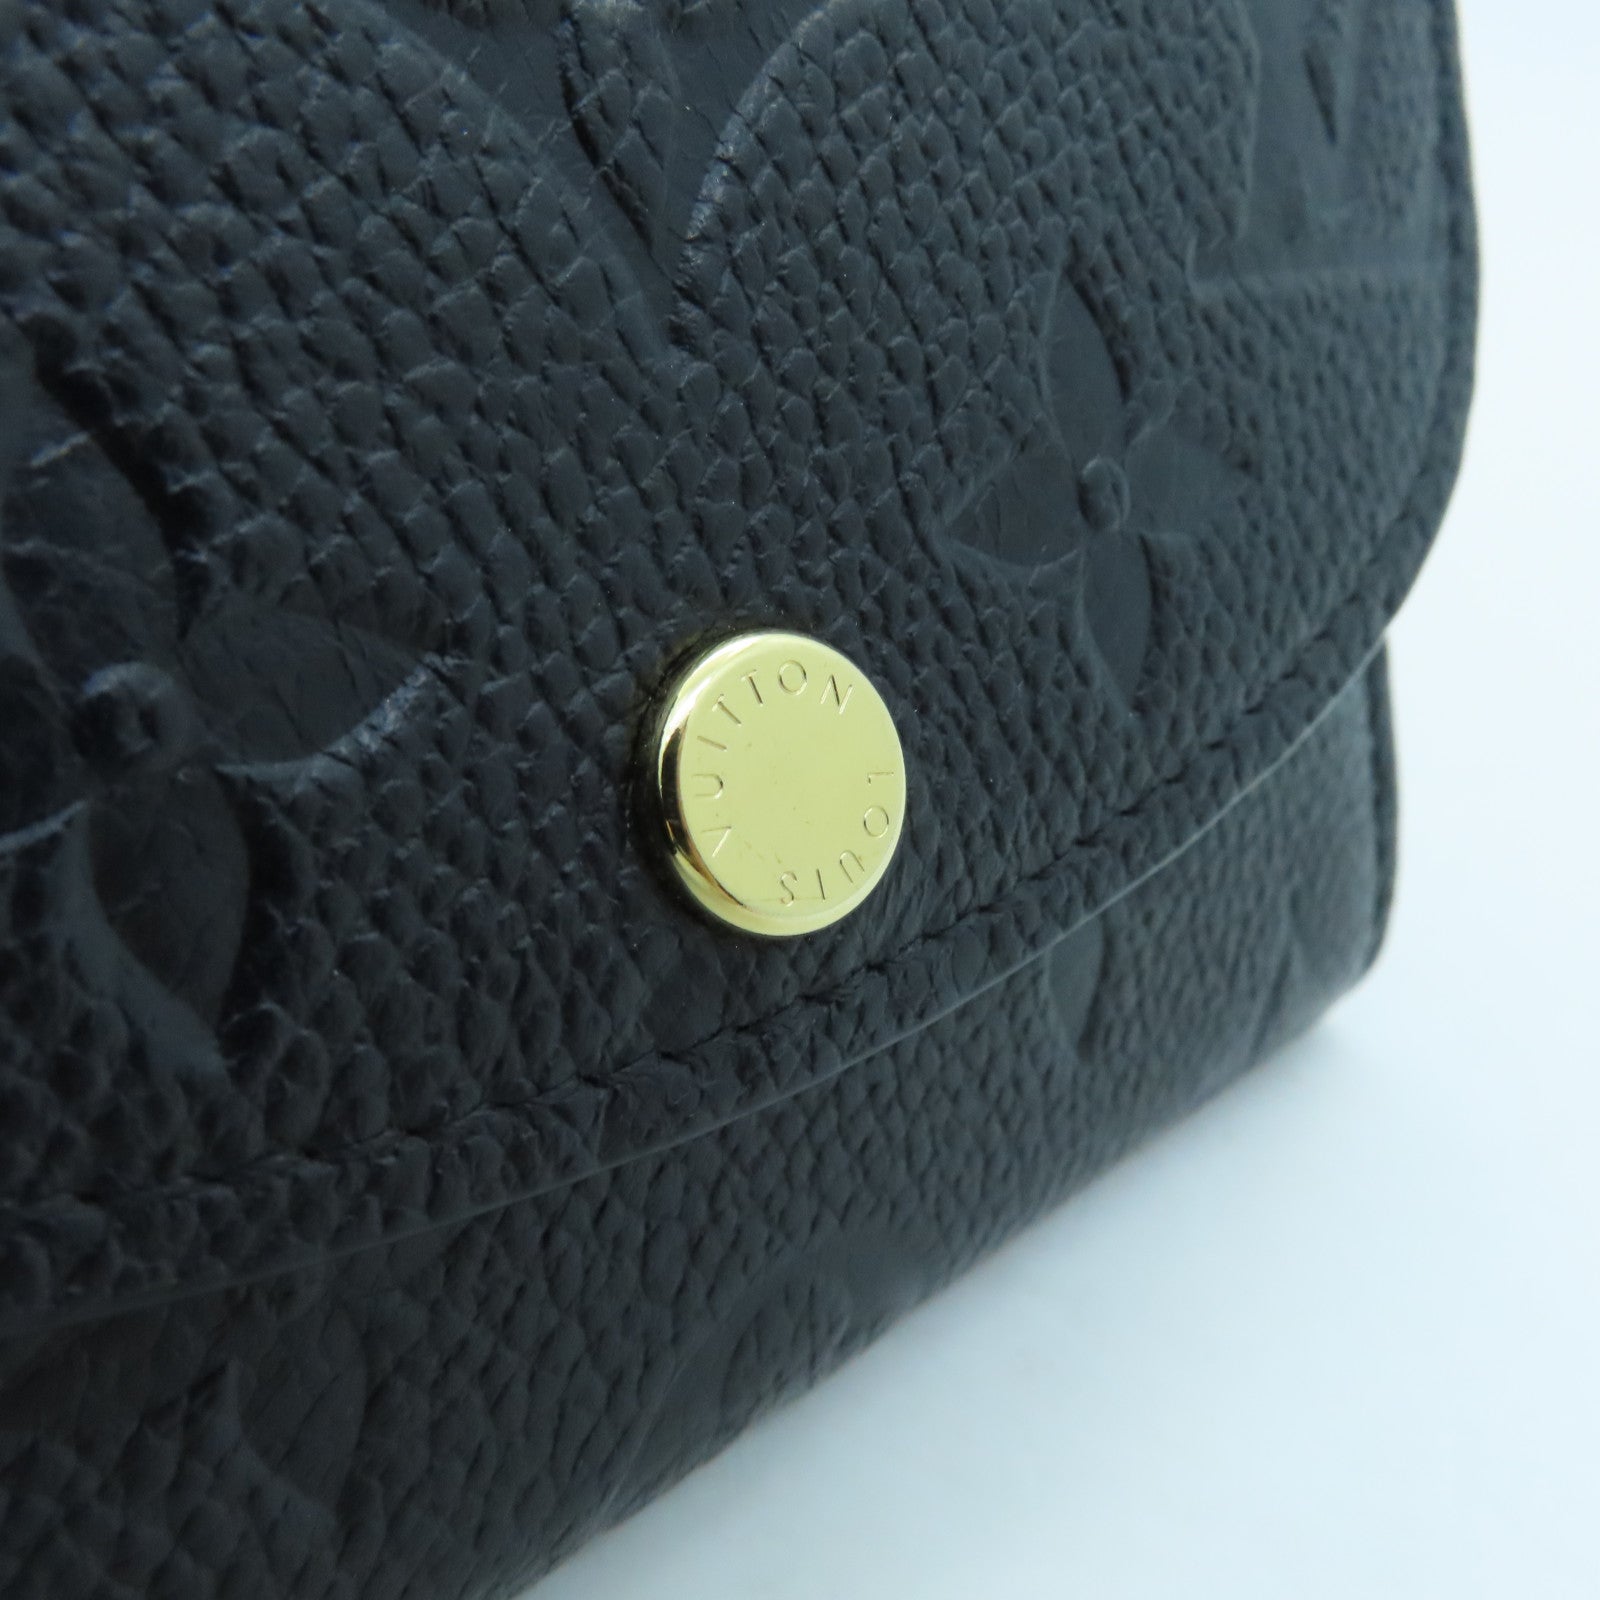 Louis Vuitton Rosalie Coin Purse Black Monogram Empreinte